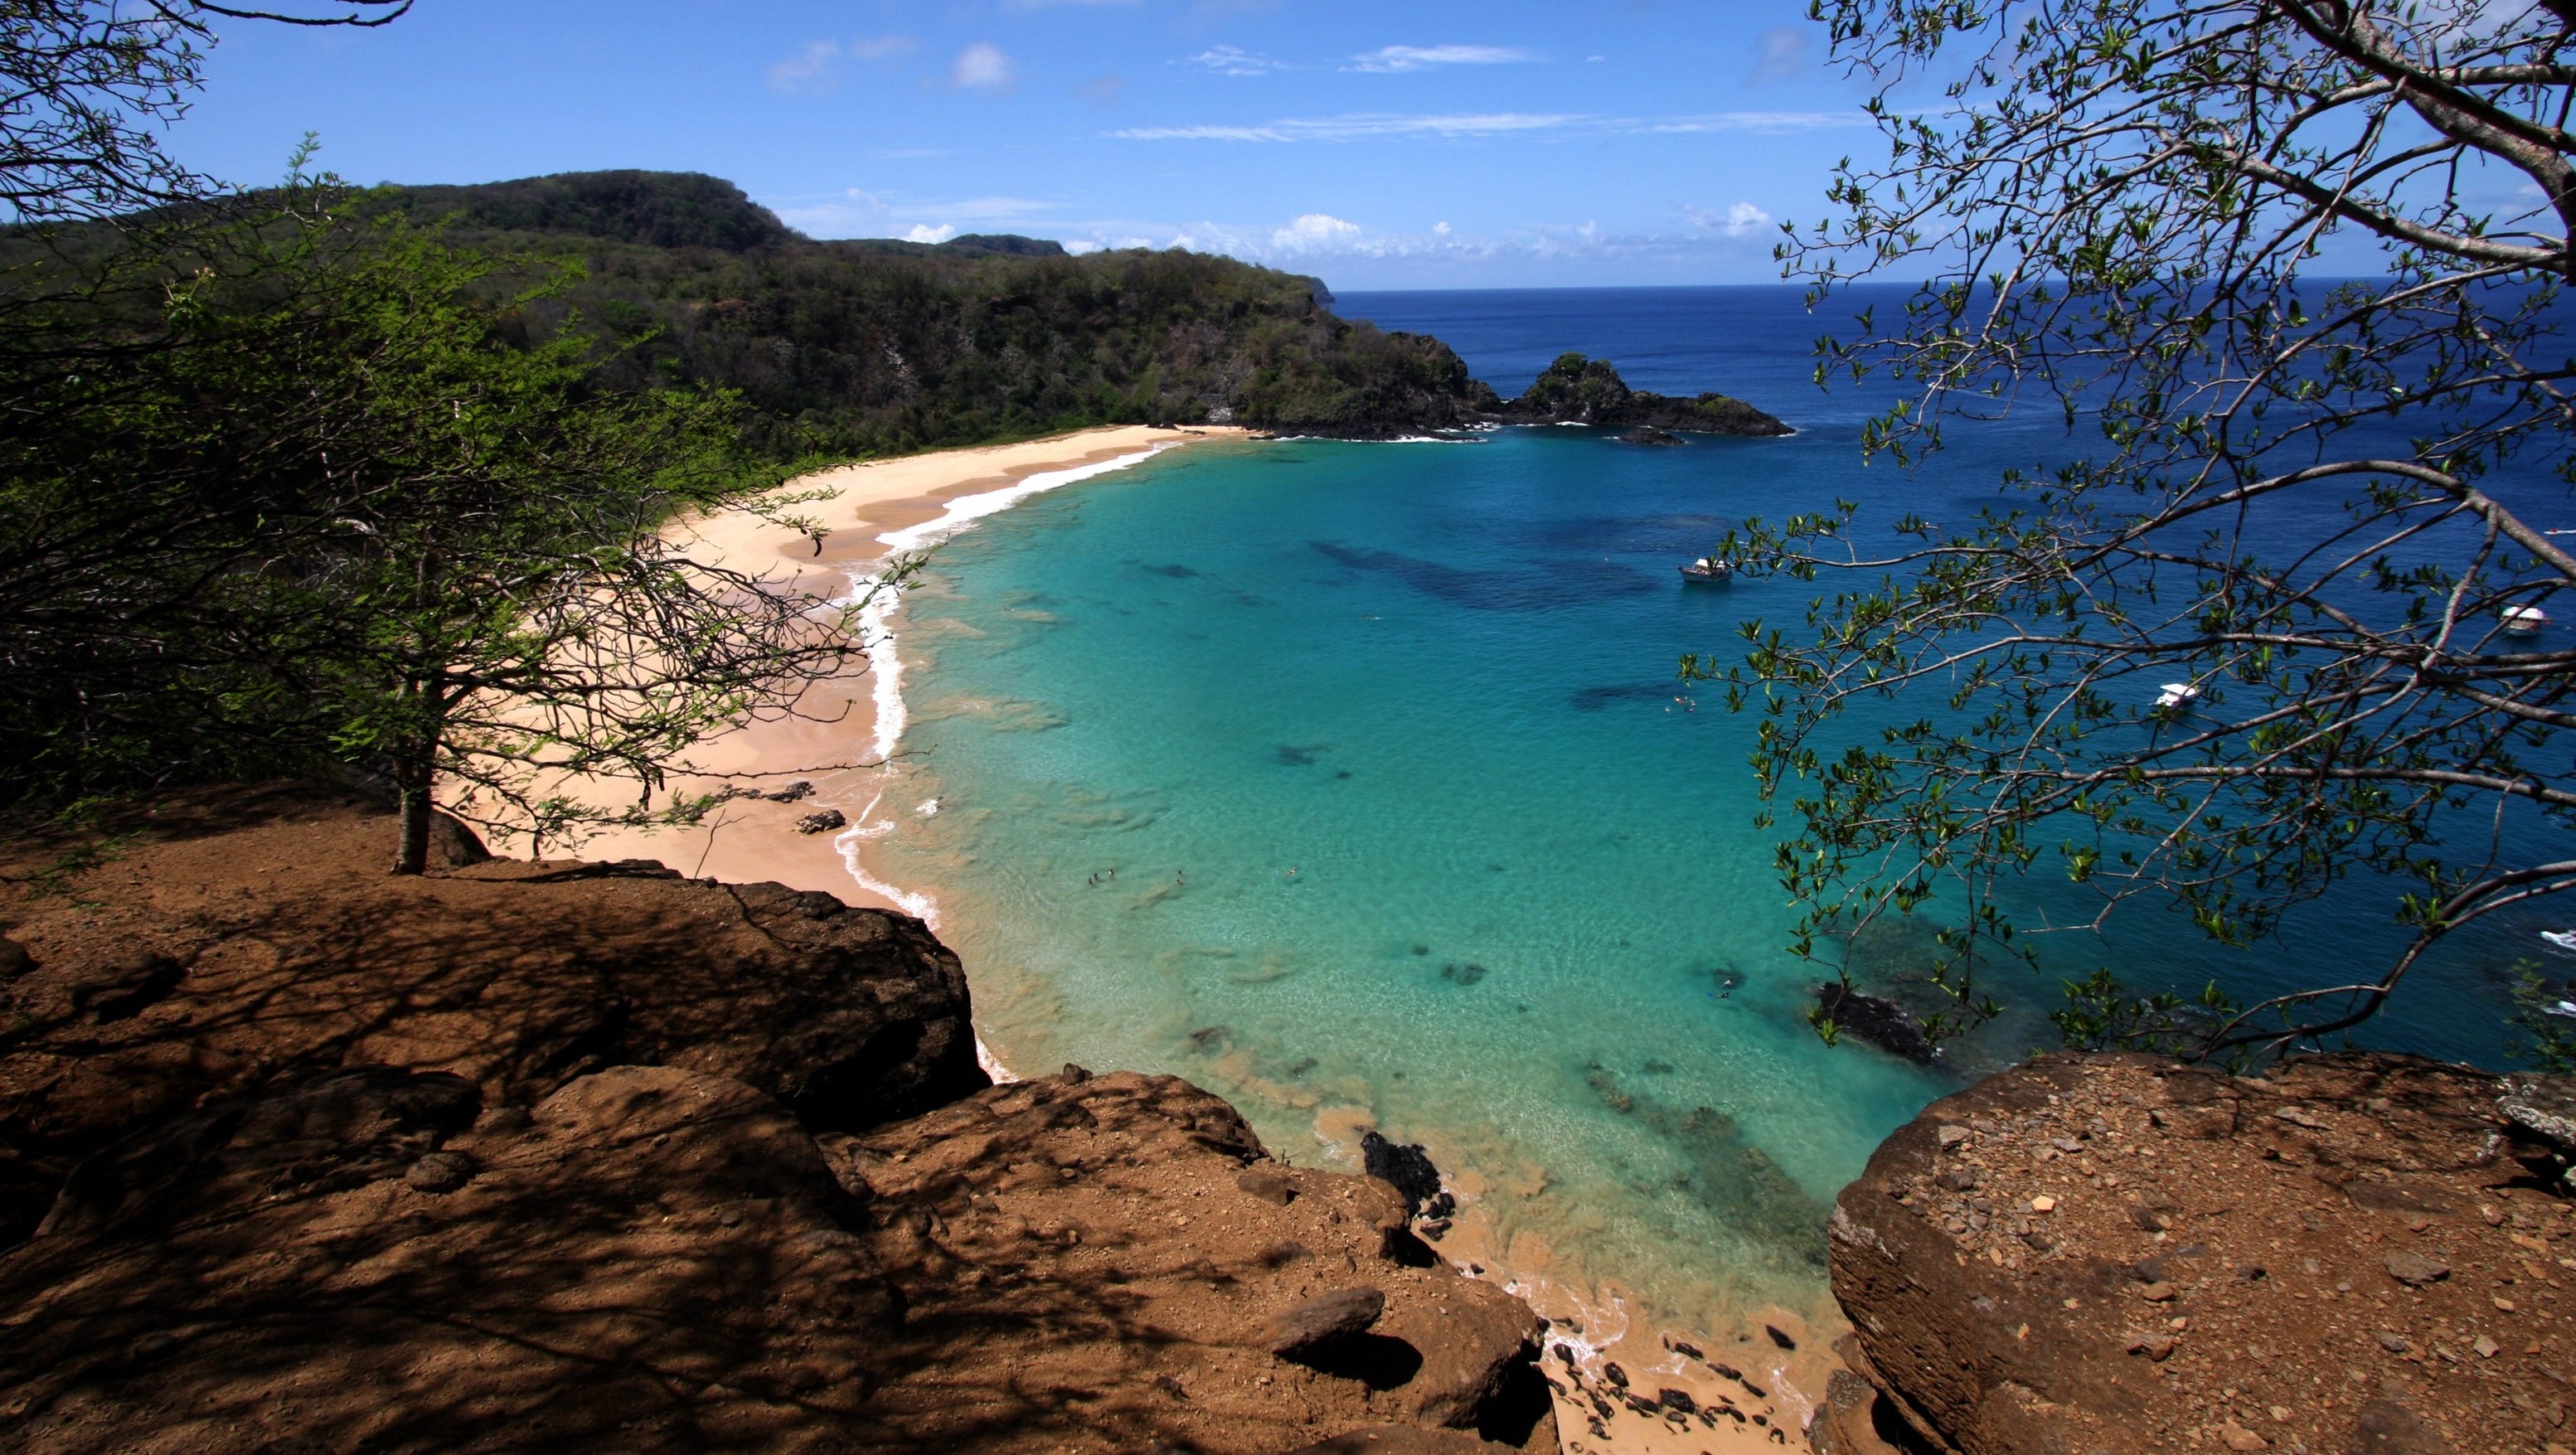 TripAdvisor ranks the best beaches in the world